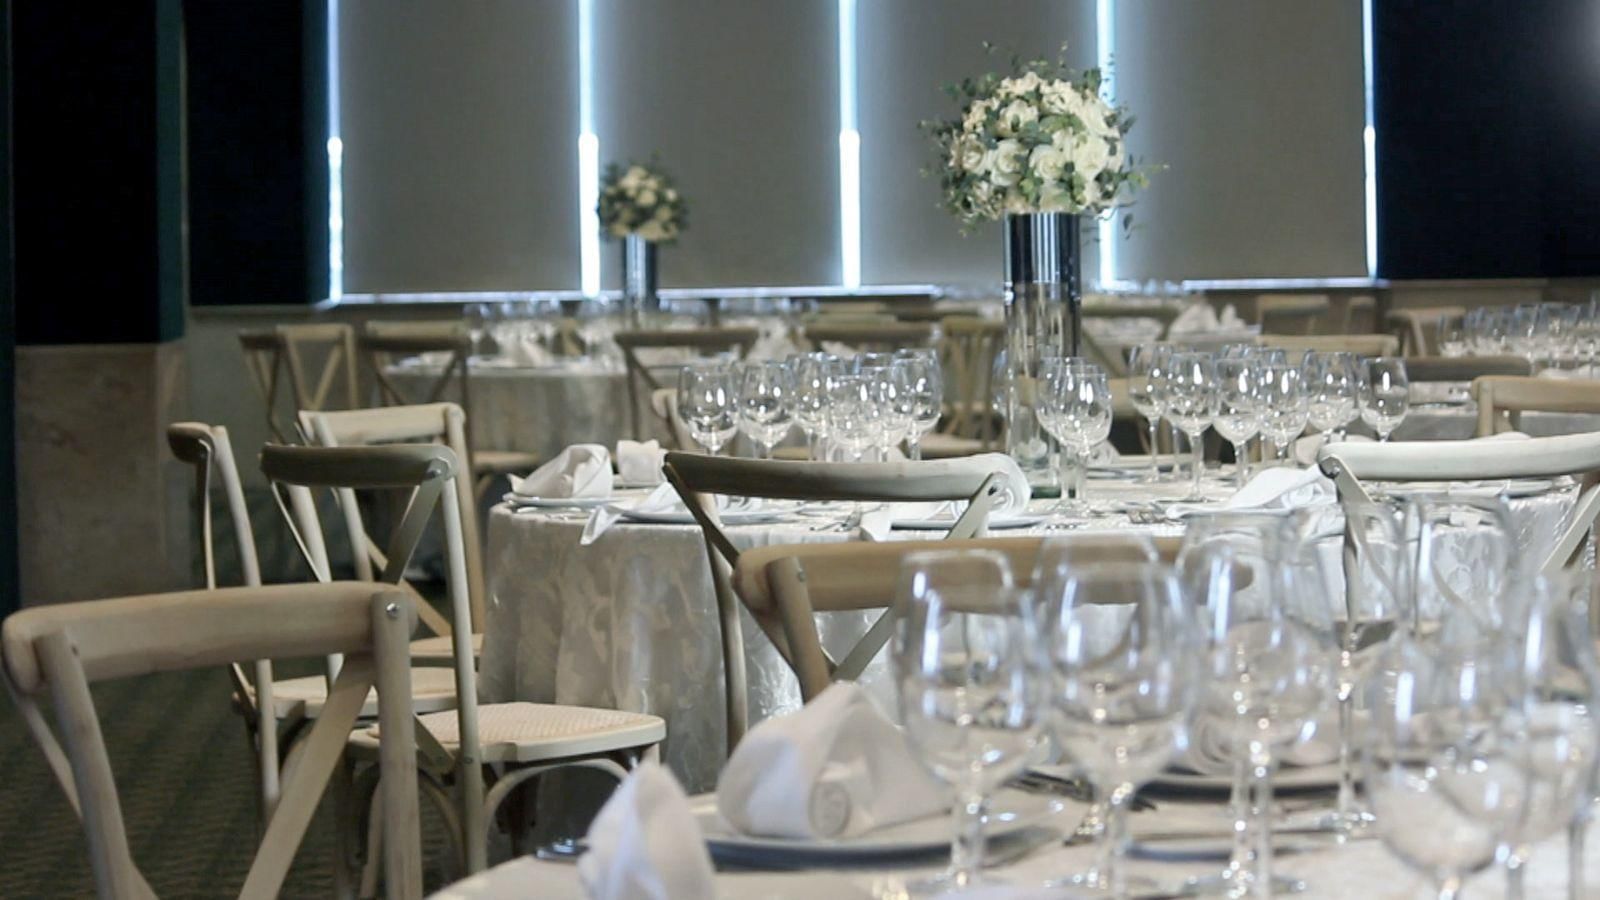 Banquet tables arranged for an event at Live Aqua Resorts